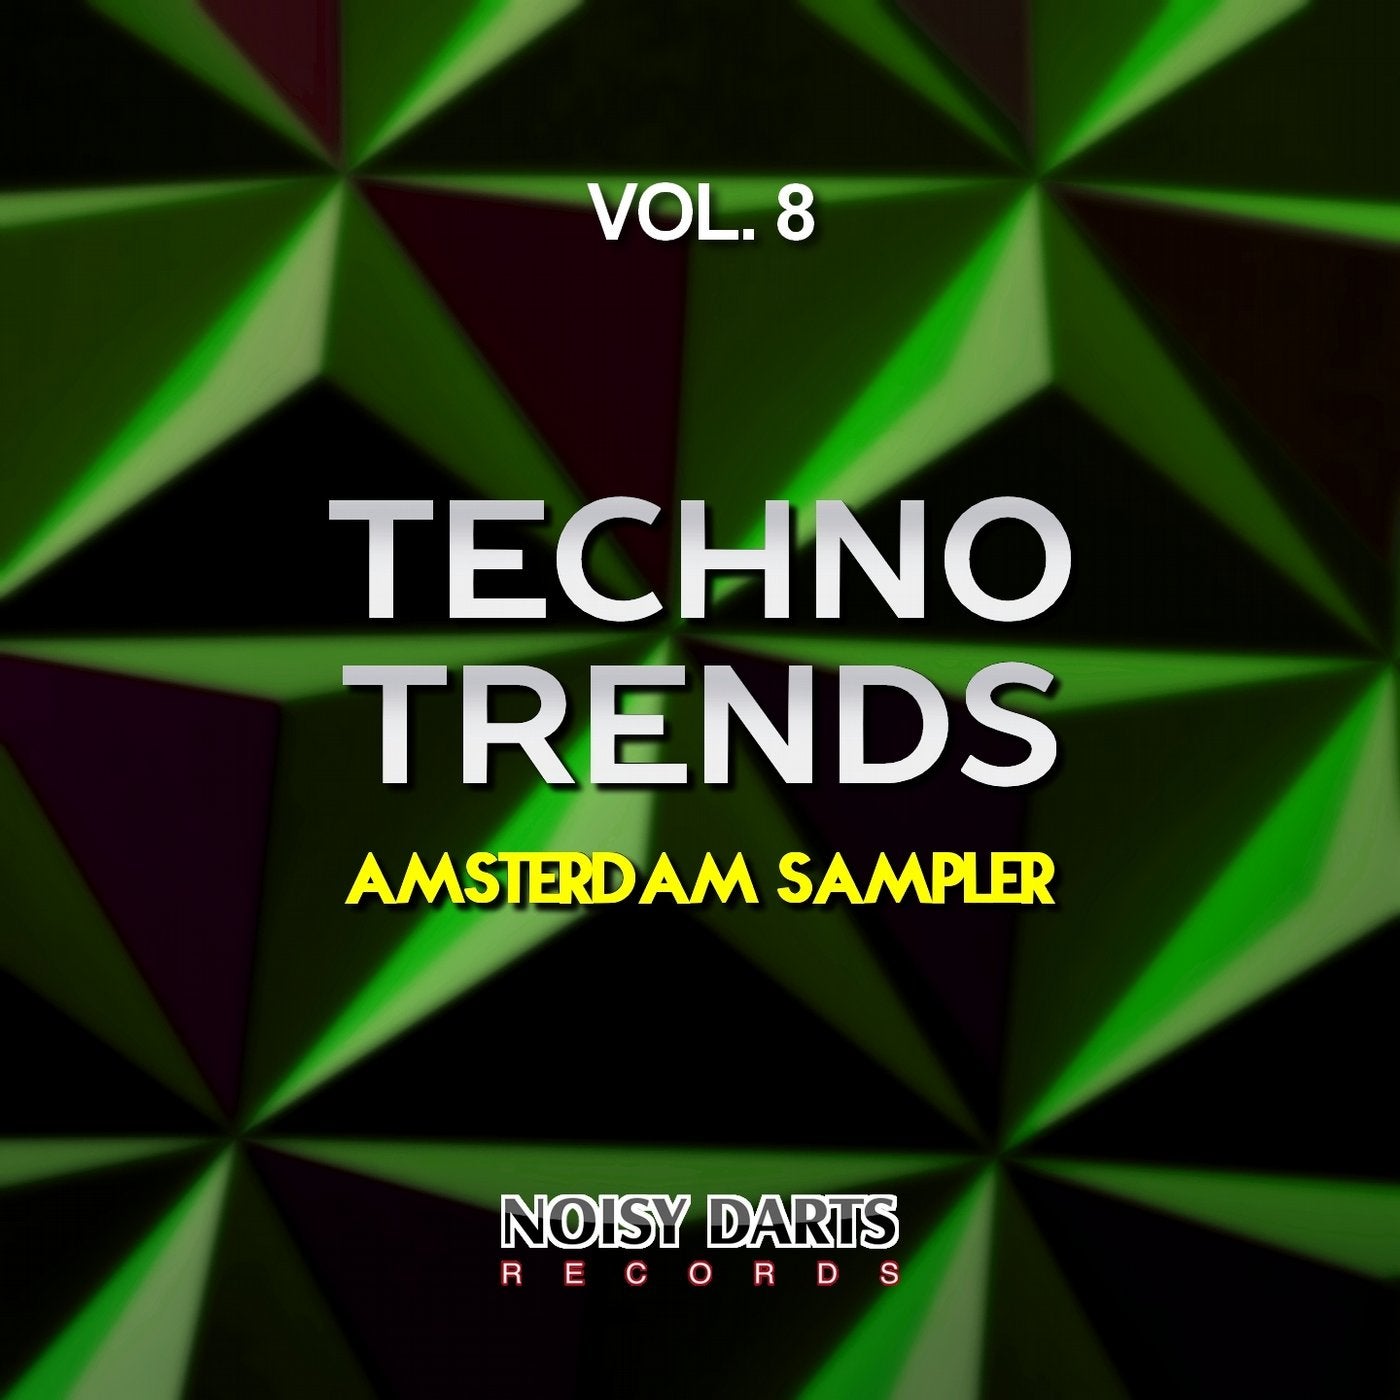 Techno Trends, Vol. 8 (Amsterdam Sampler)